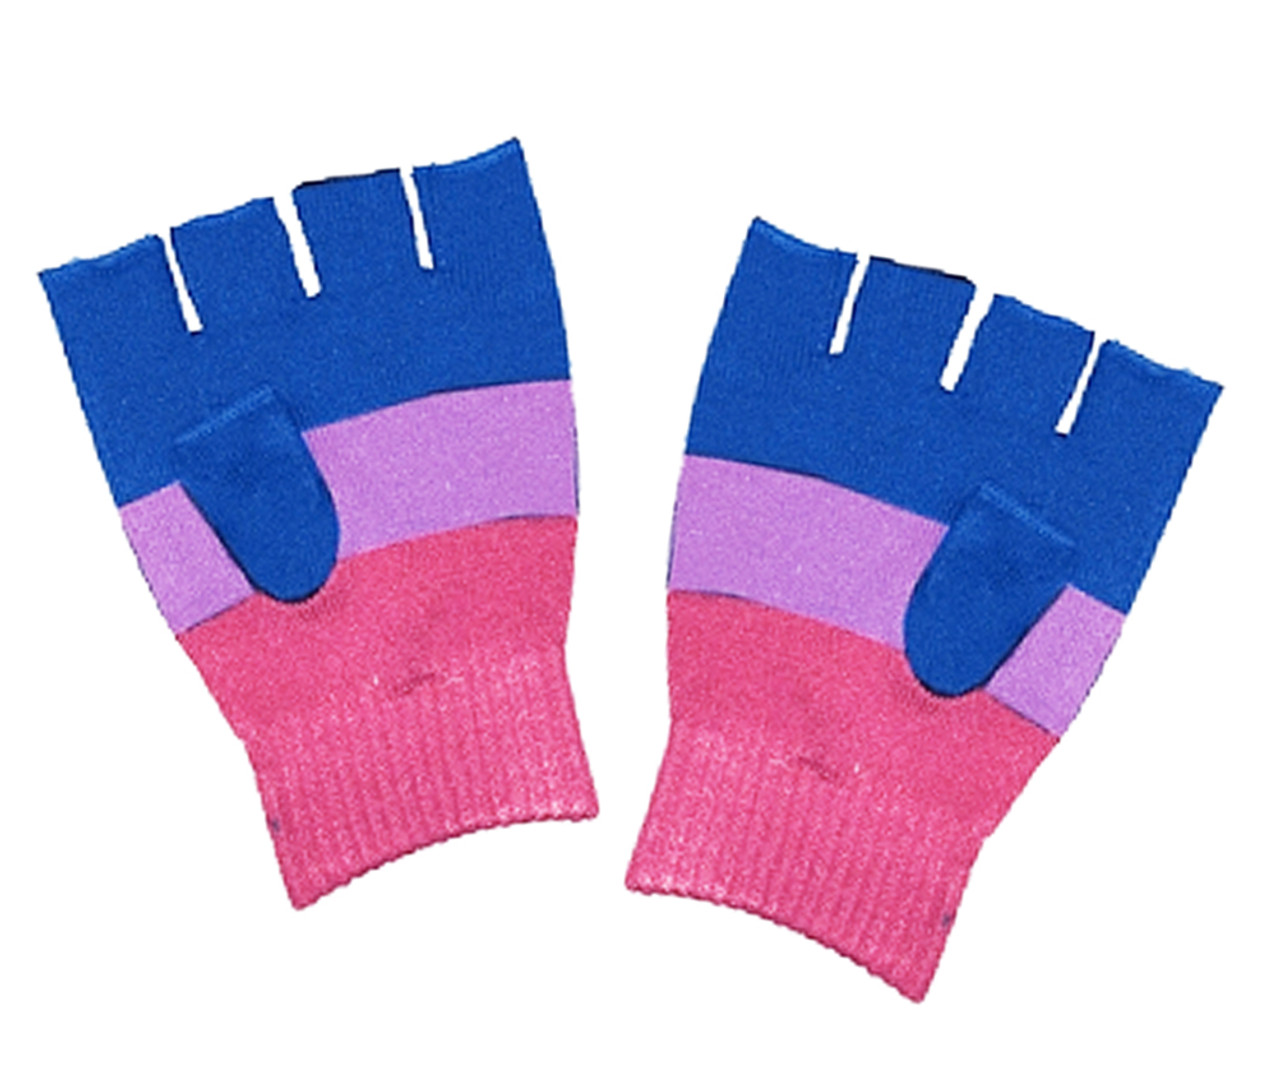 Bi Pride Flag / Bisexual Pride Fingerless Gloves - LGBT Pride Apparel and Clothing, bi pride flag colors